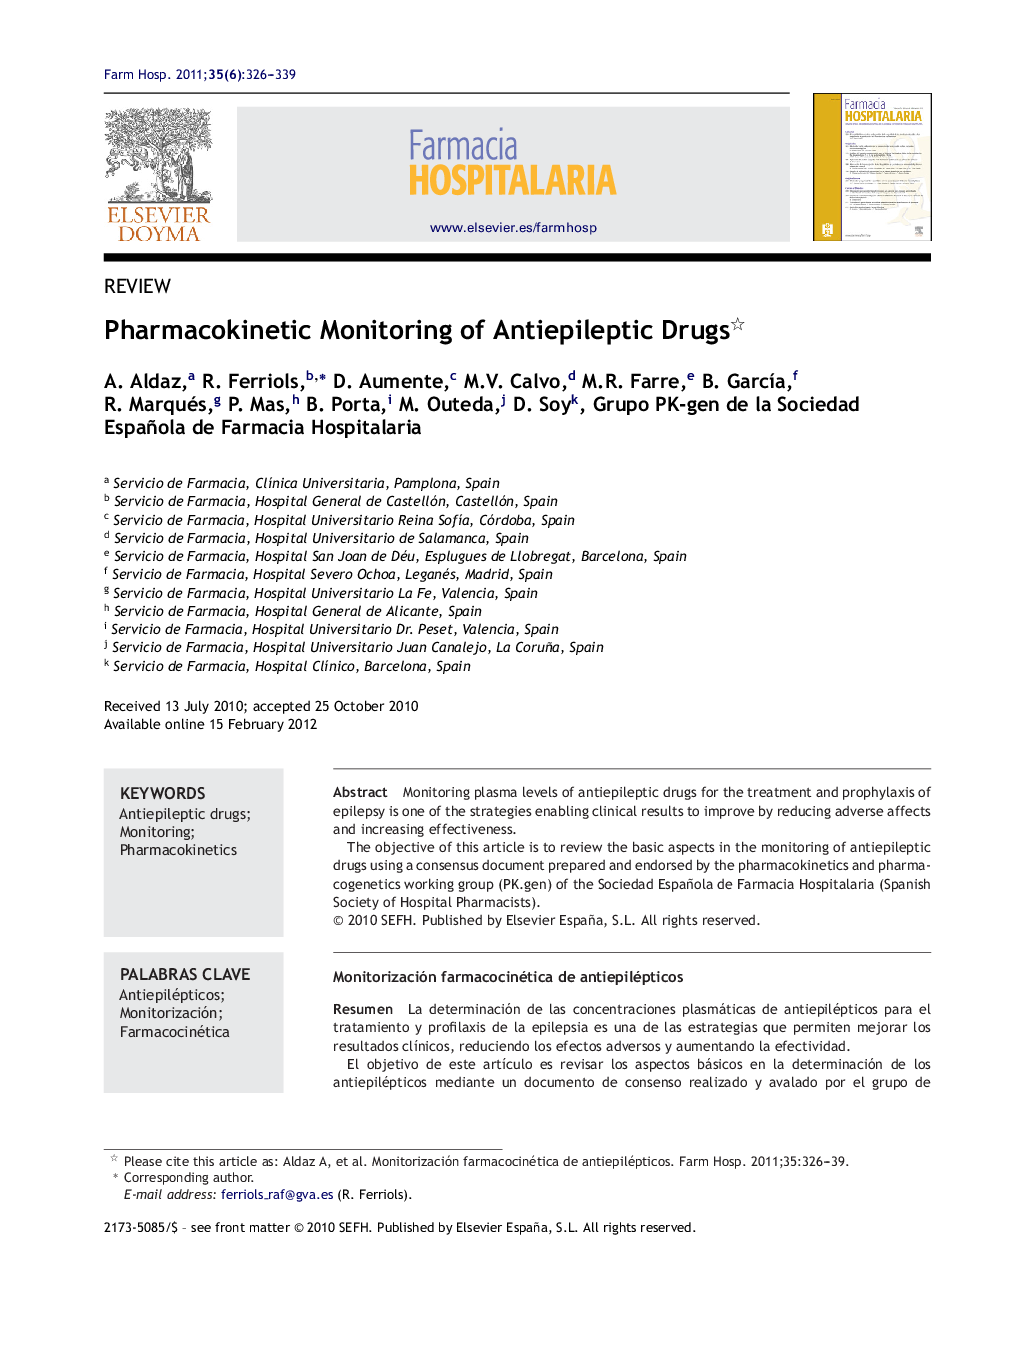 Pharmacokinetic Monitoring of Antiepileptic Drugs